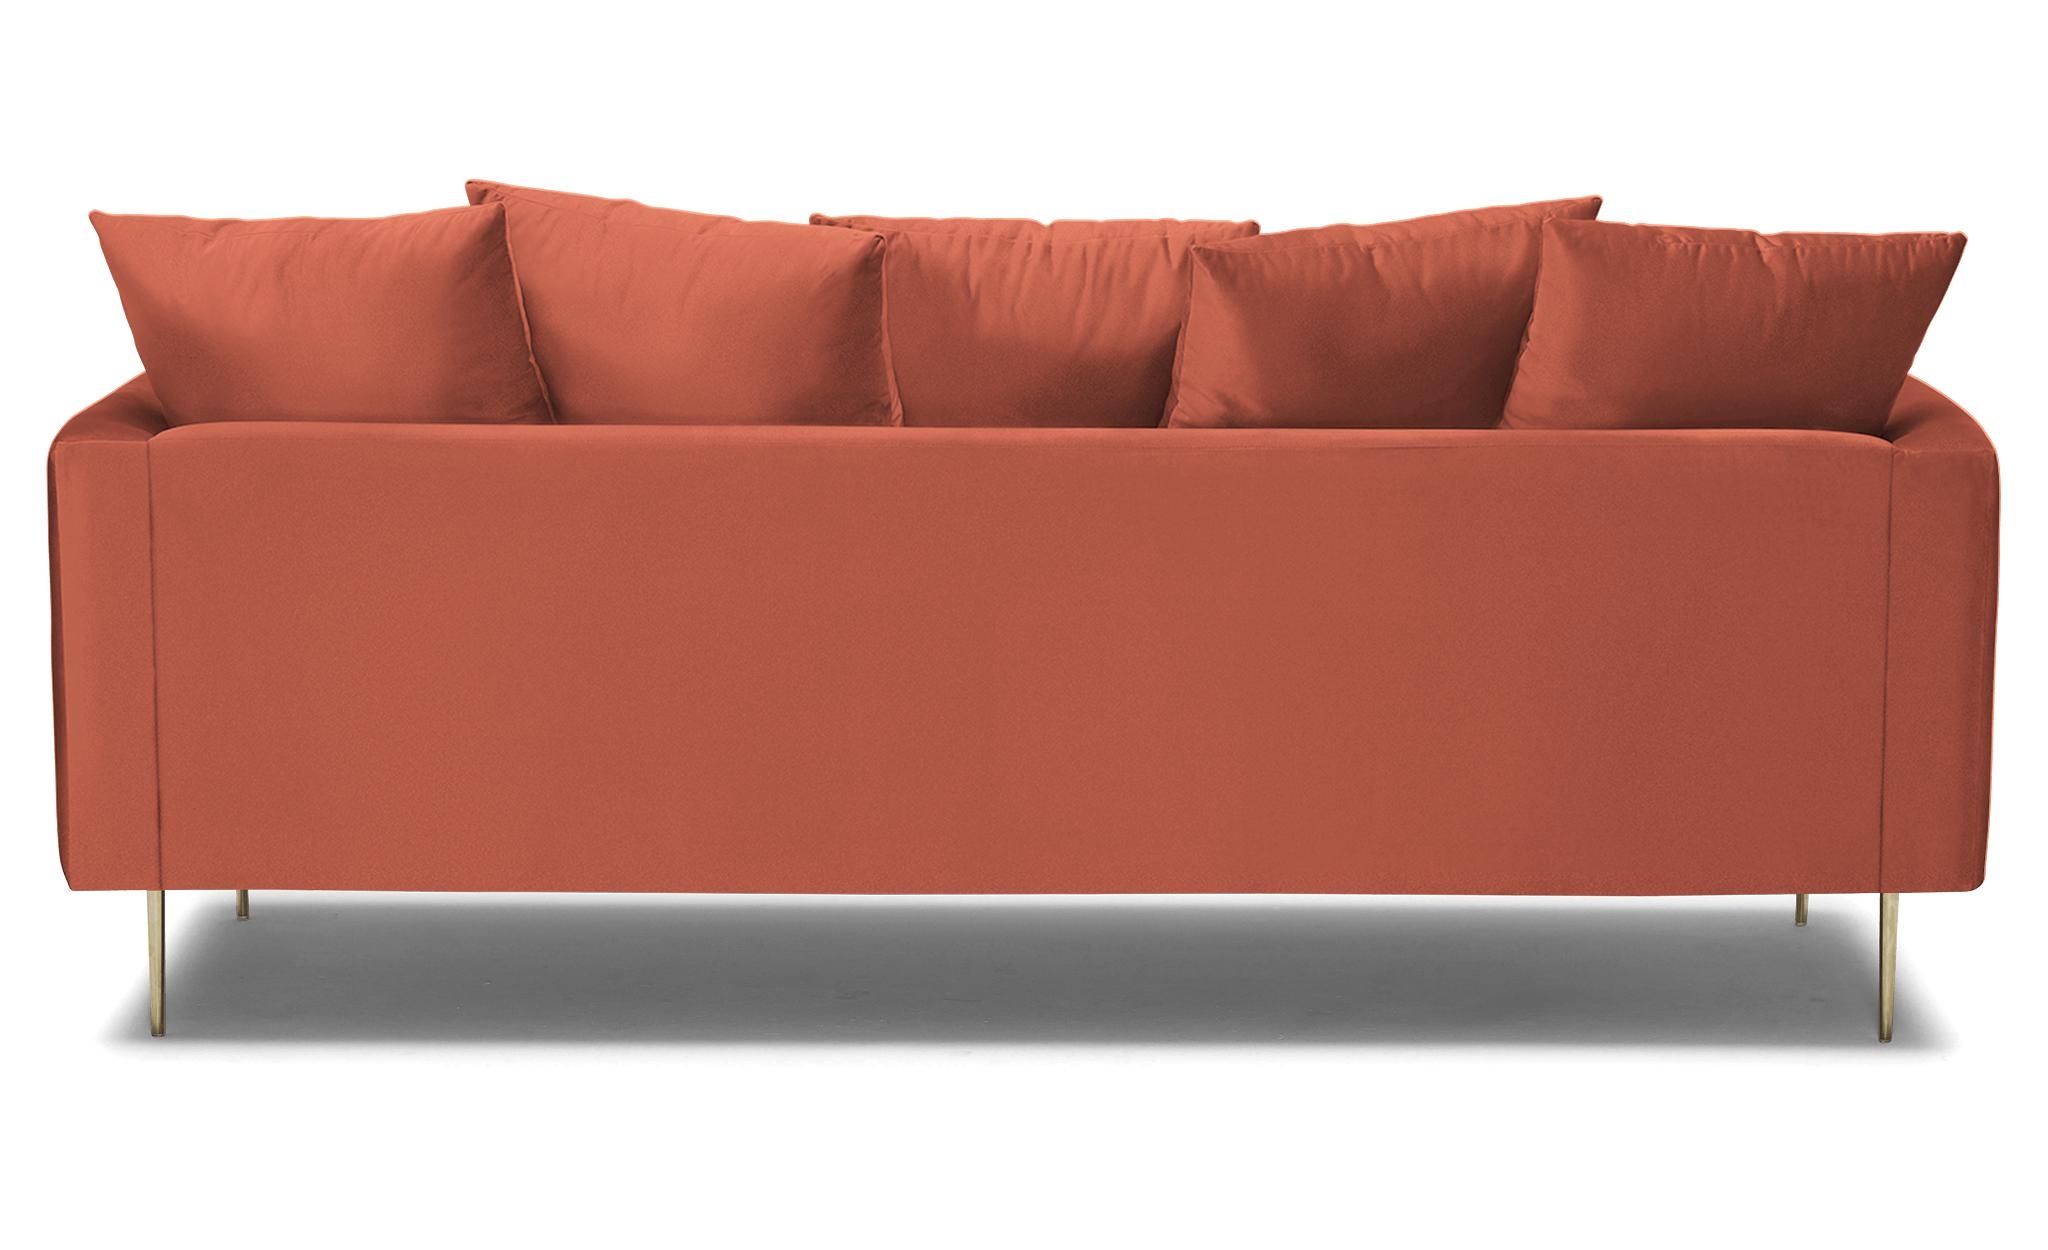 Orange Aime Mid Century Modern Sofa - Key Largo Coral - Image 4